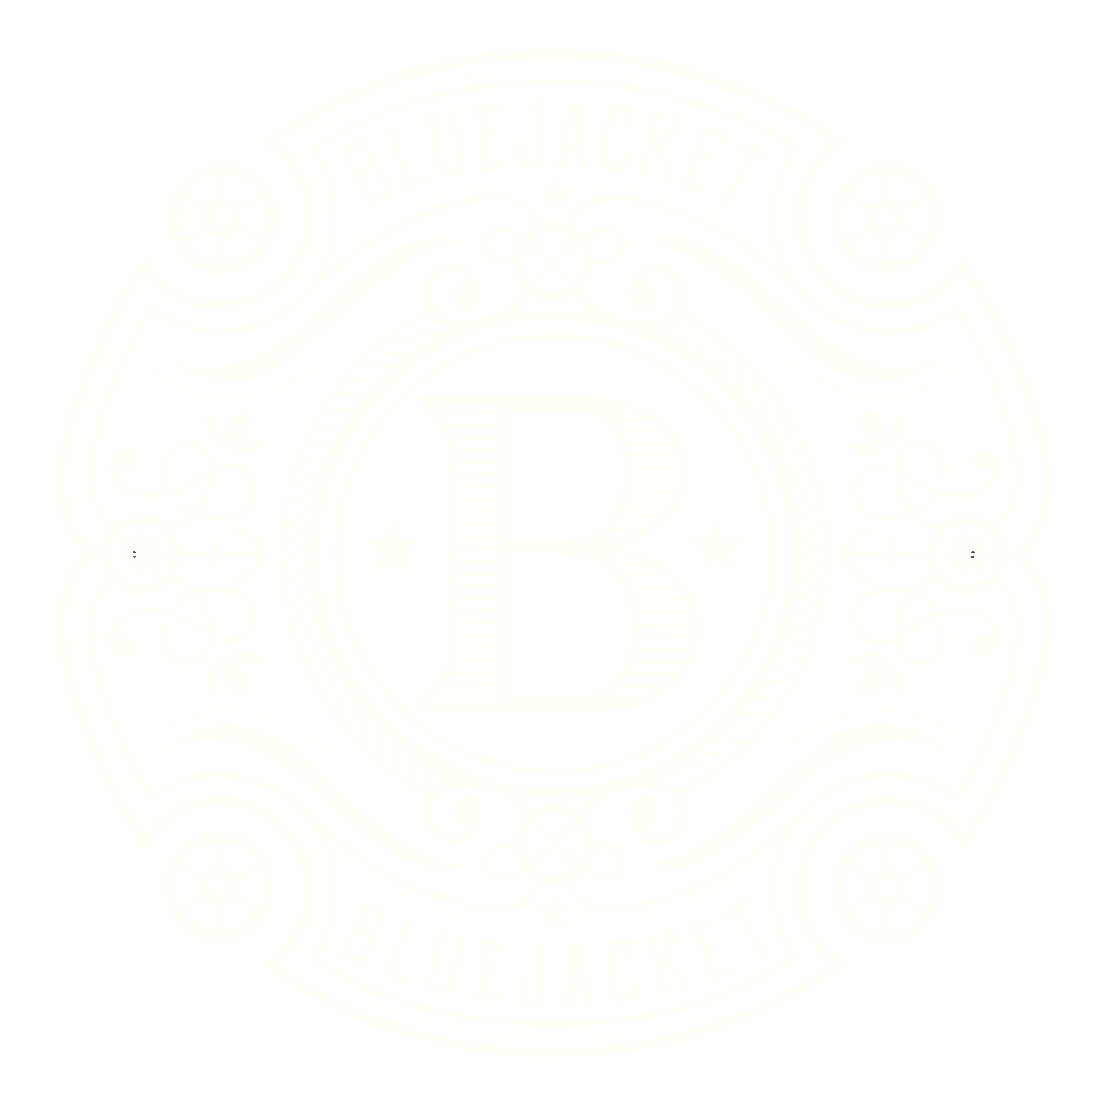 BLUEJACKET BREWERY Logo